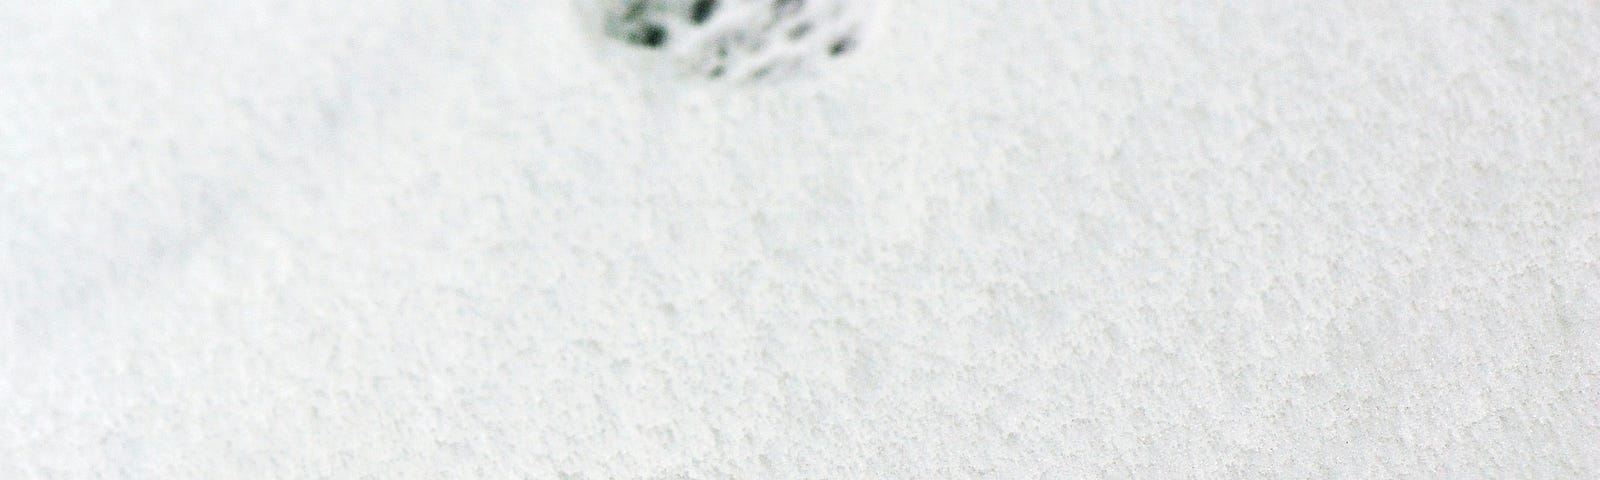 cat paw marks on snow